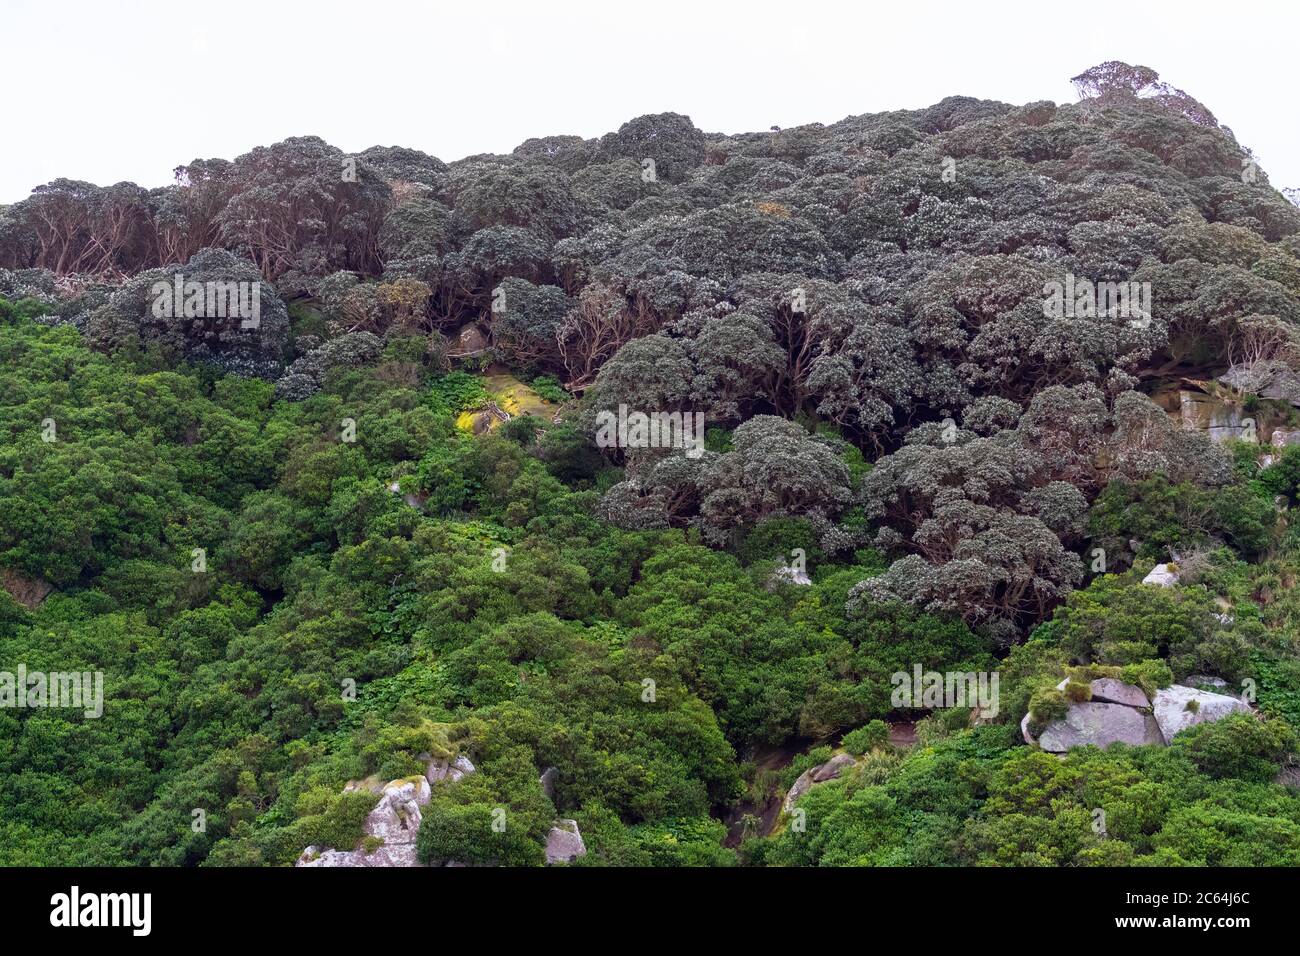 Coastal woodland on The Snares, Subantarctic New Zealand. Steep hill covered in native green vegetation. Stock Photo